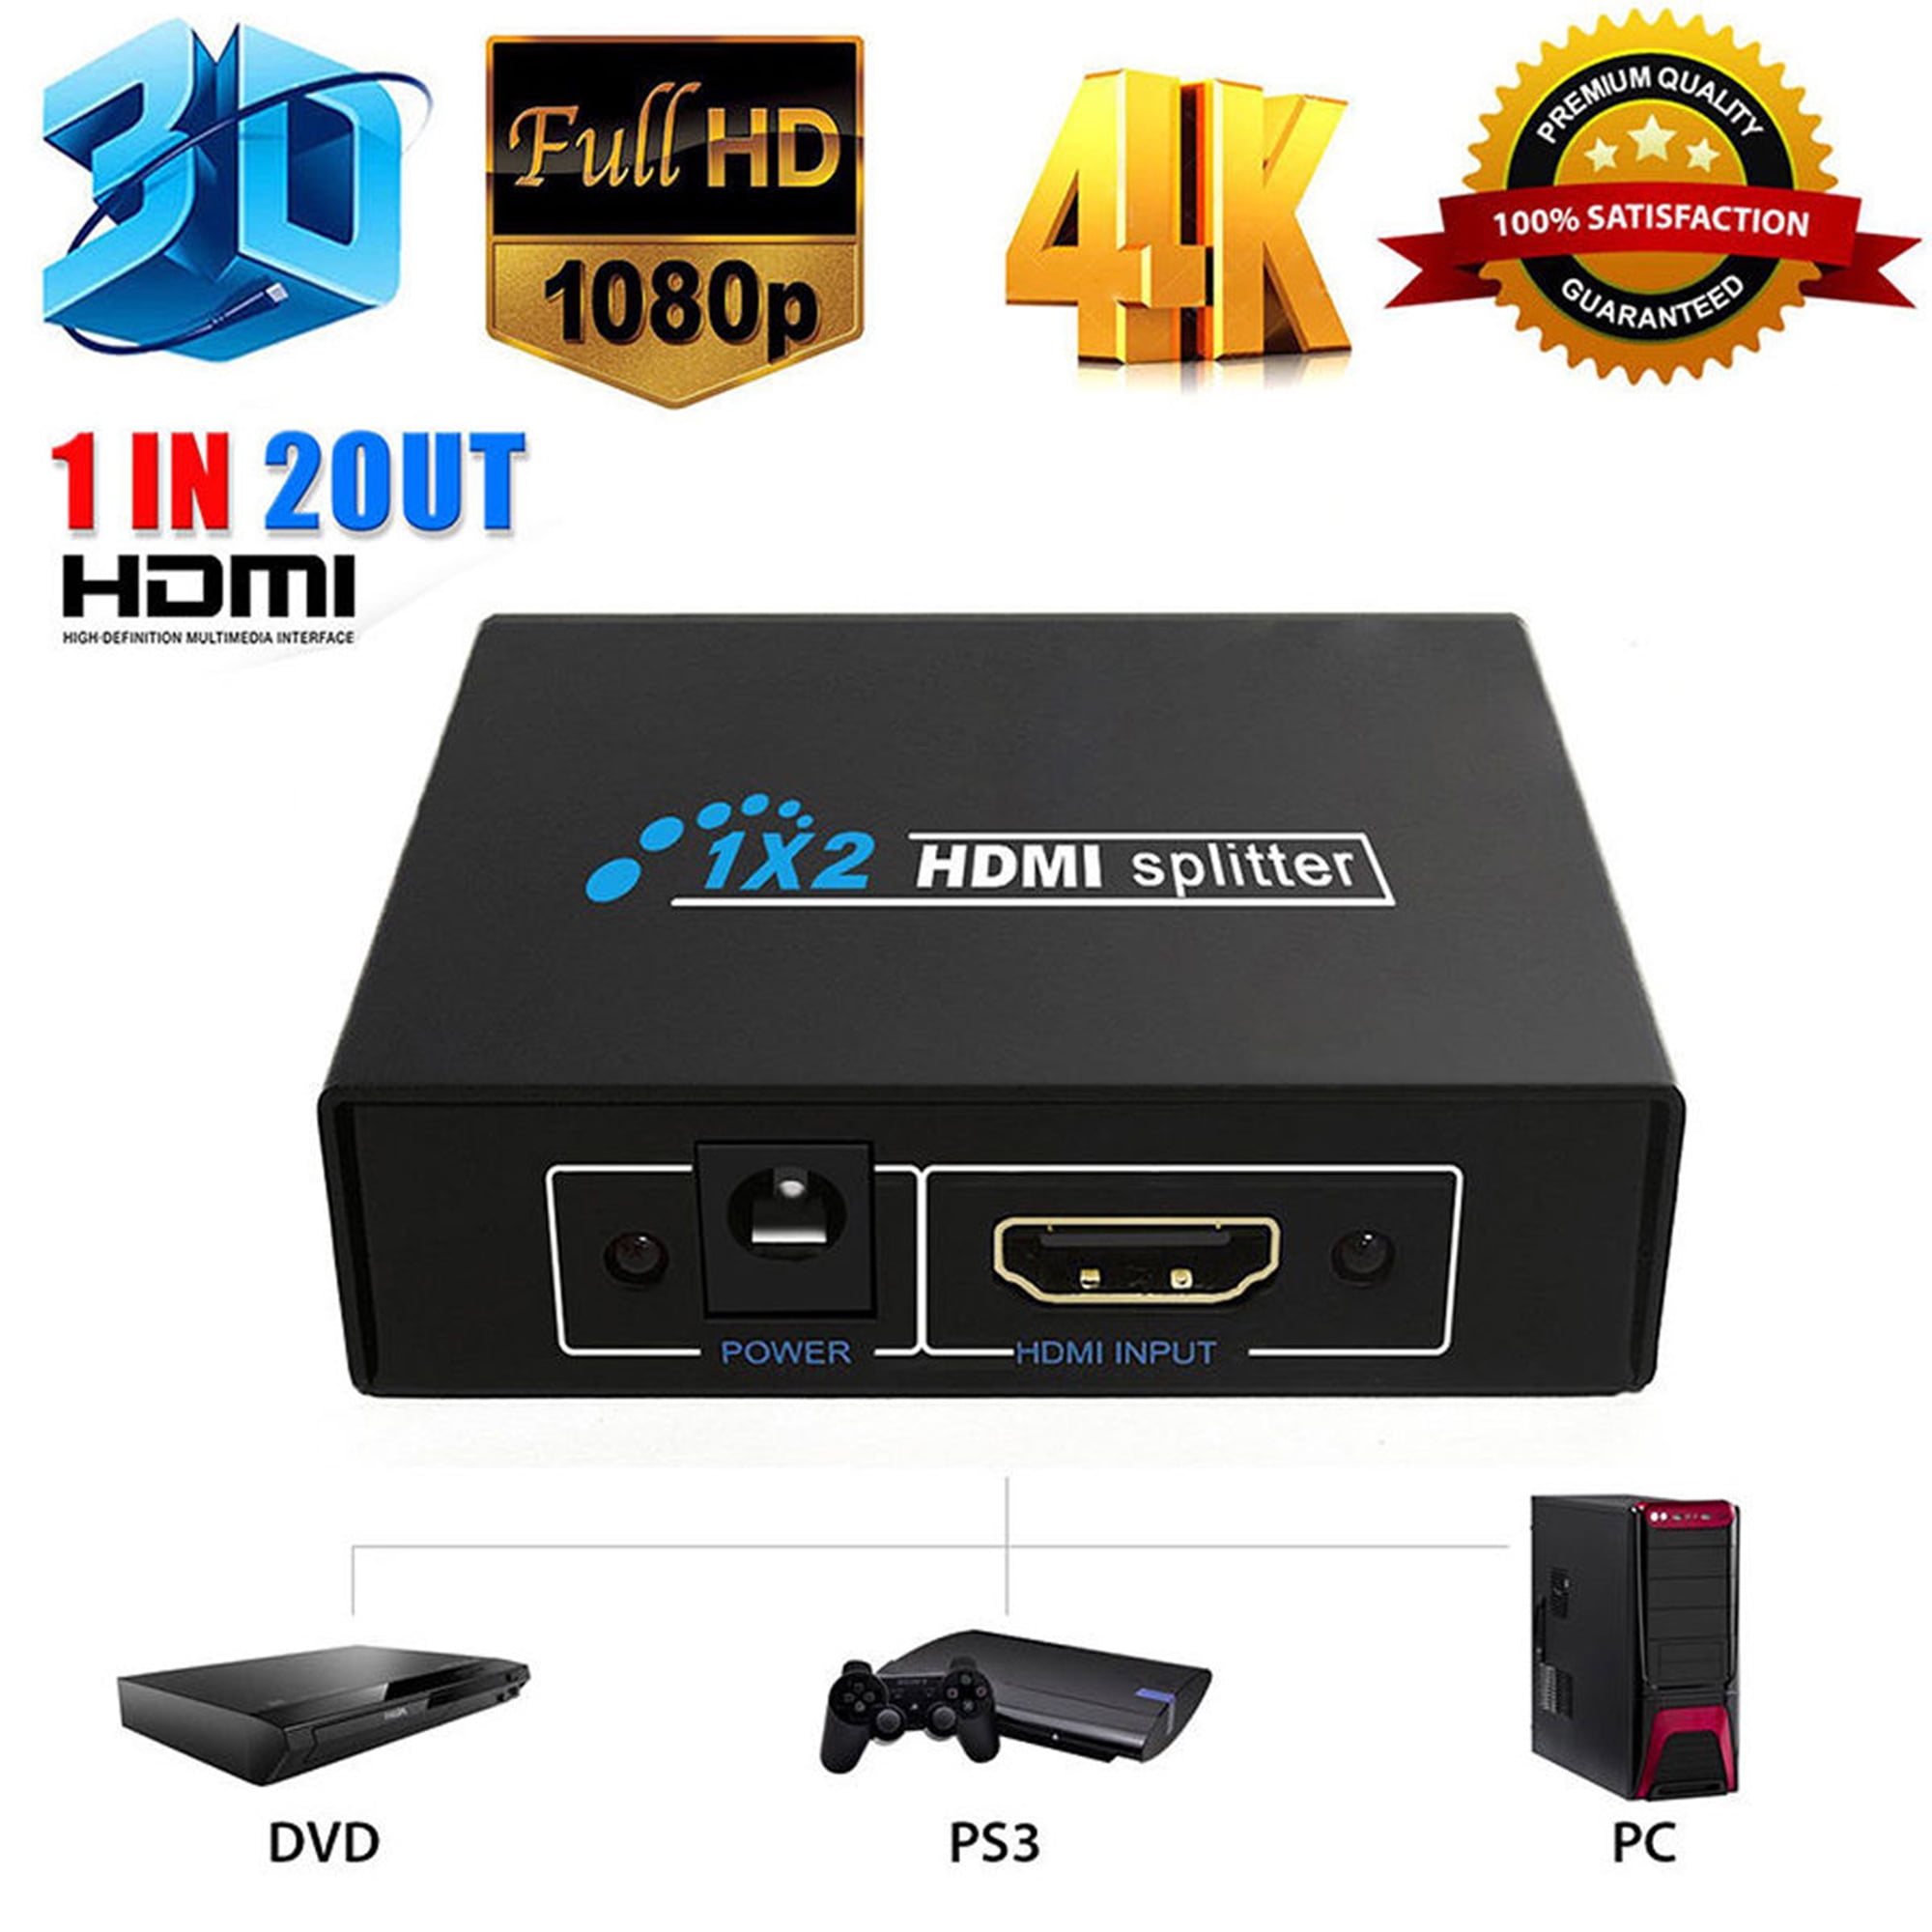 Full HD 4K HDMI Splitter 2 2 Ports Repeater Amplifier Hub 3D 1080p 1 In 2 Out&NI 